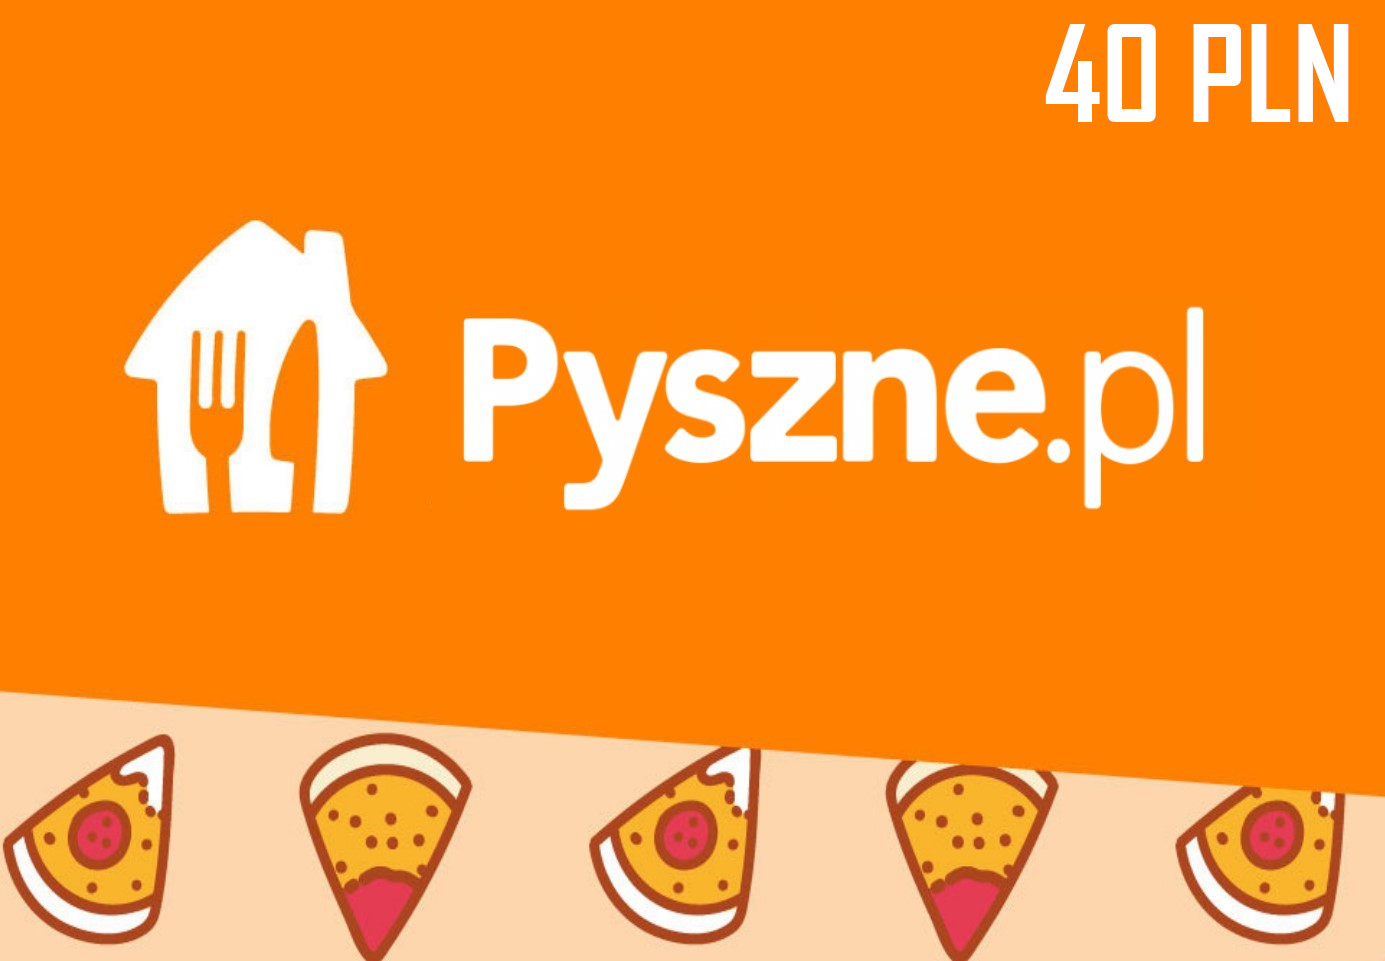 Pyszne.pl 40 PLN Gift Card PL 11.82 $